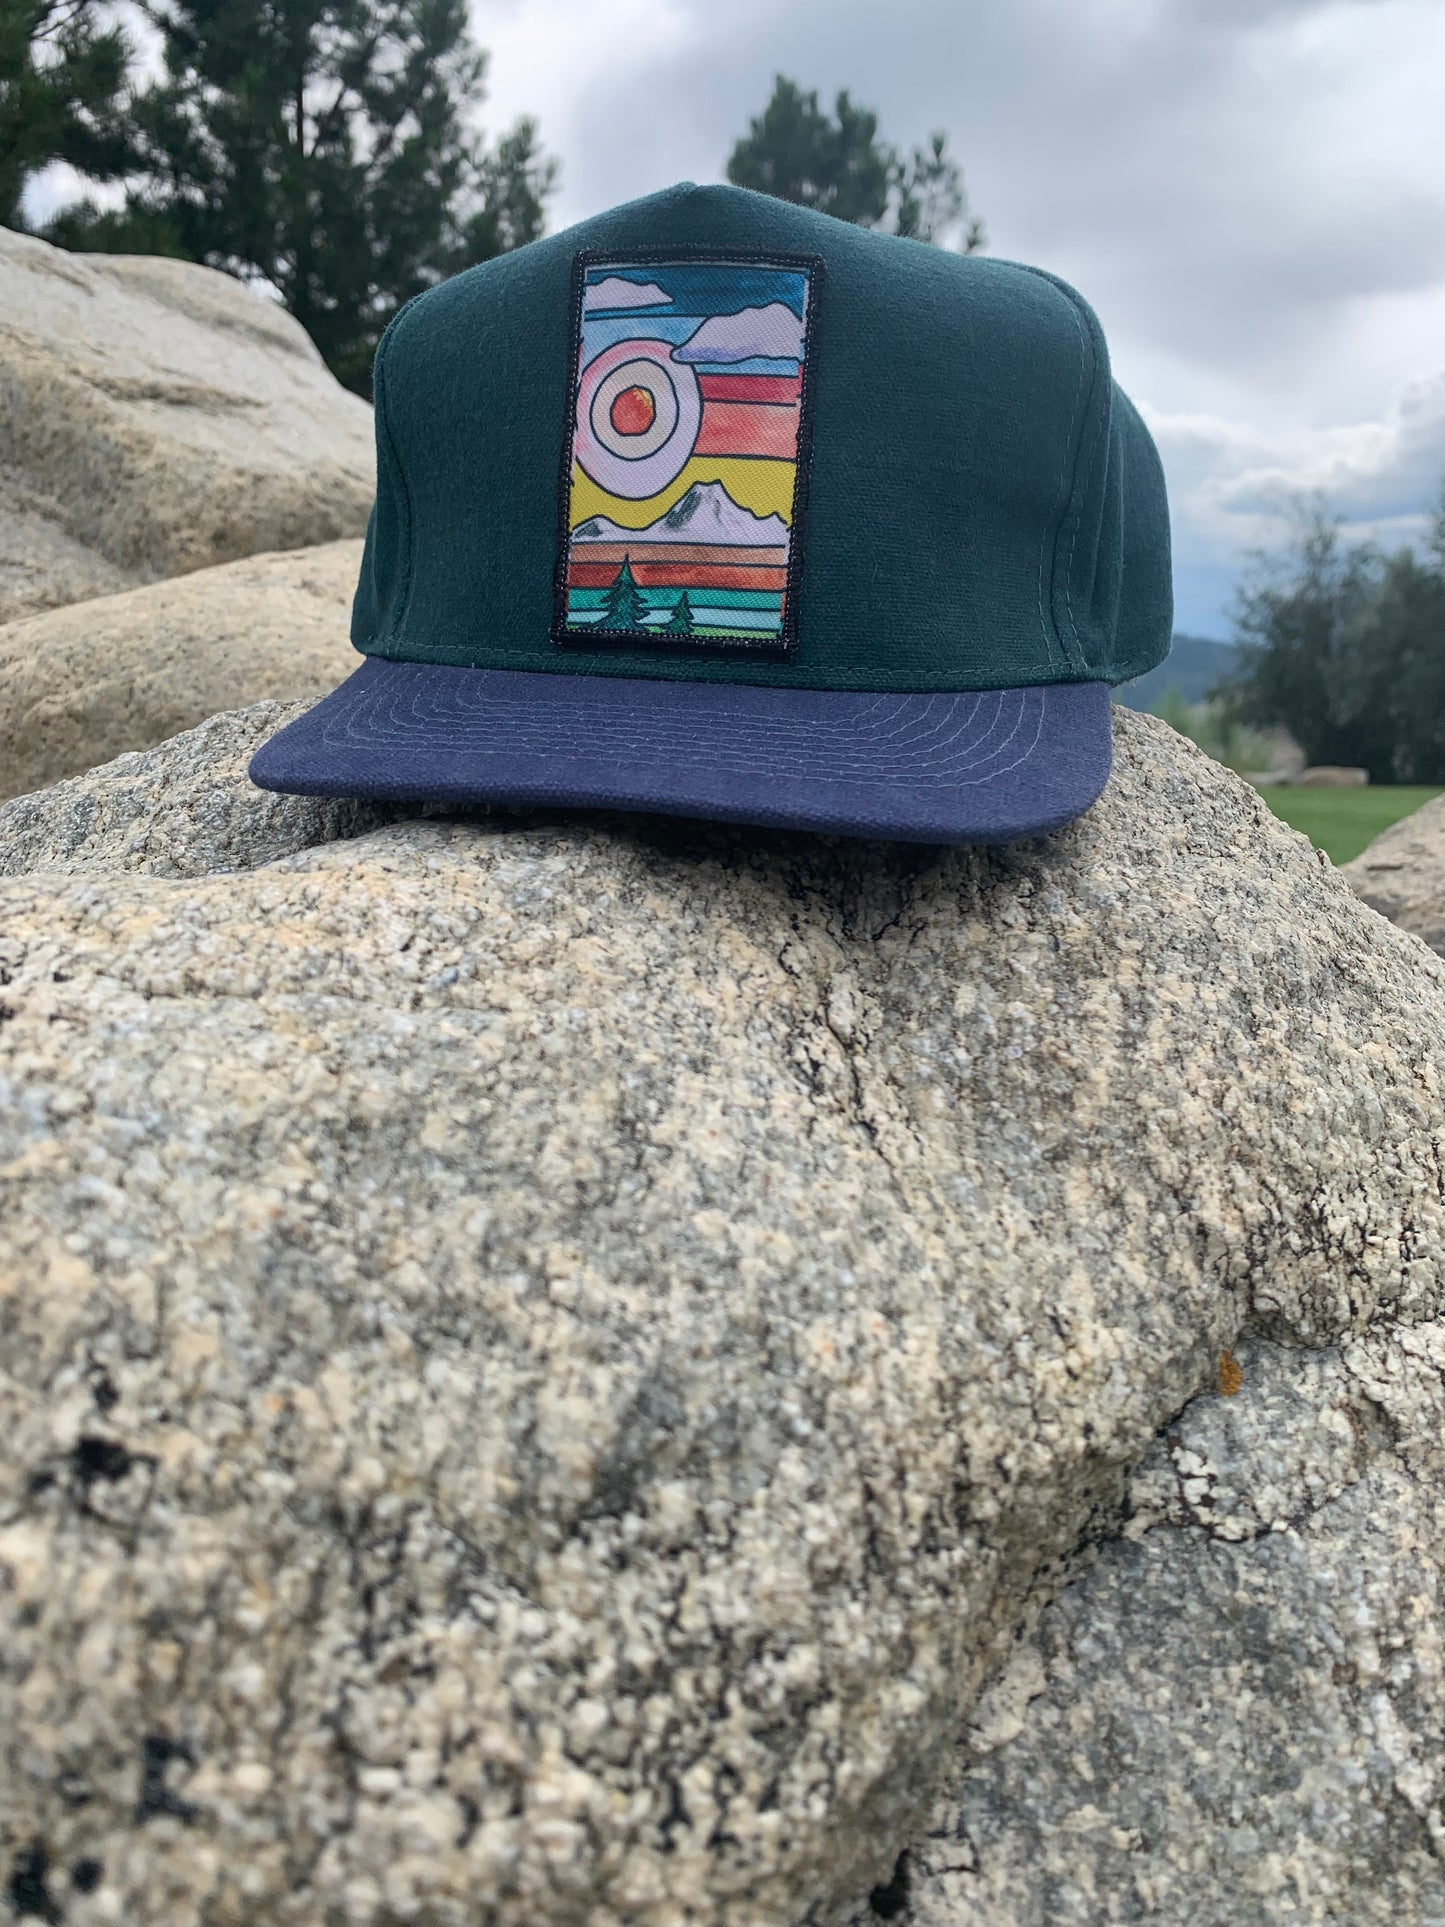 Cali Mts. Art Patch Hat